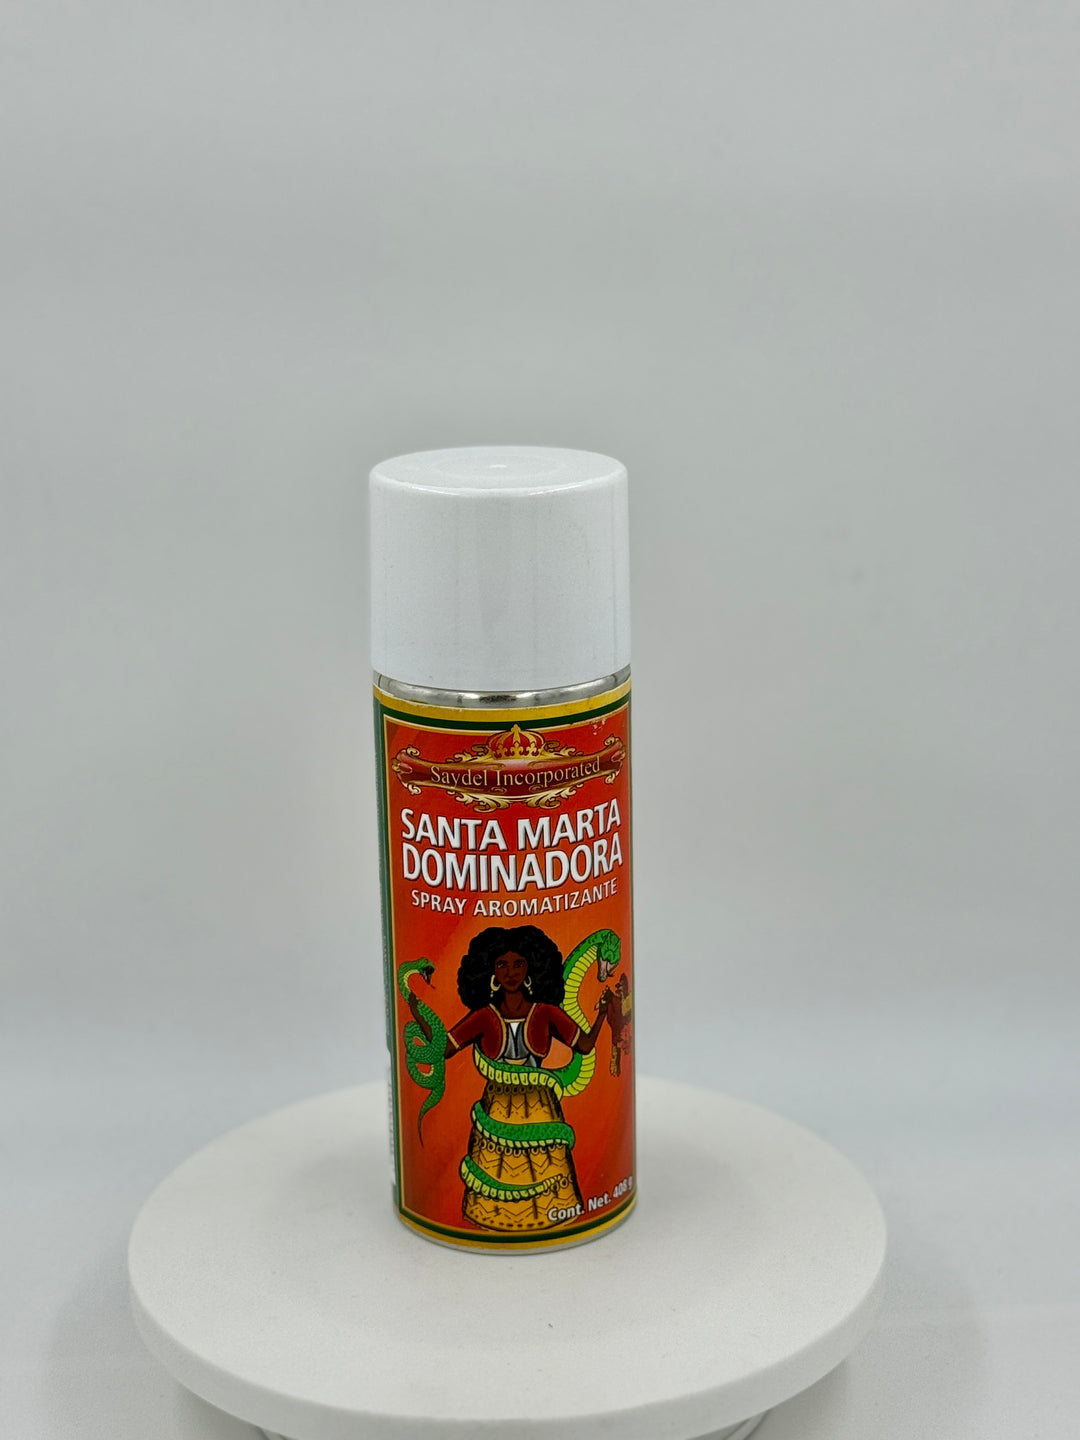 MARTHA DOMINATING (MARTHA DOMINADORA) -Aromatic Spray